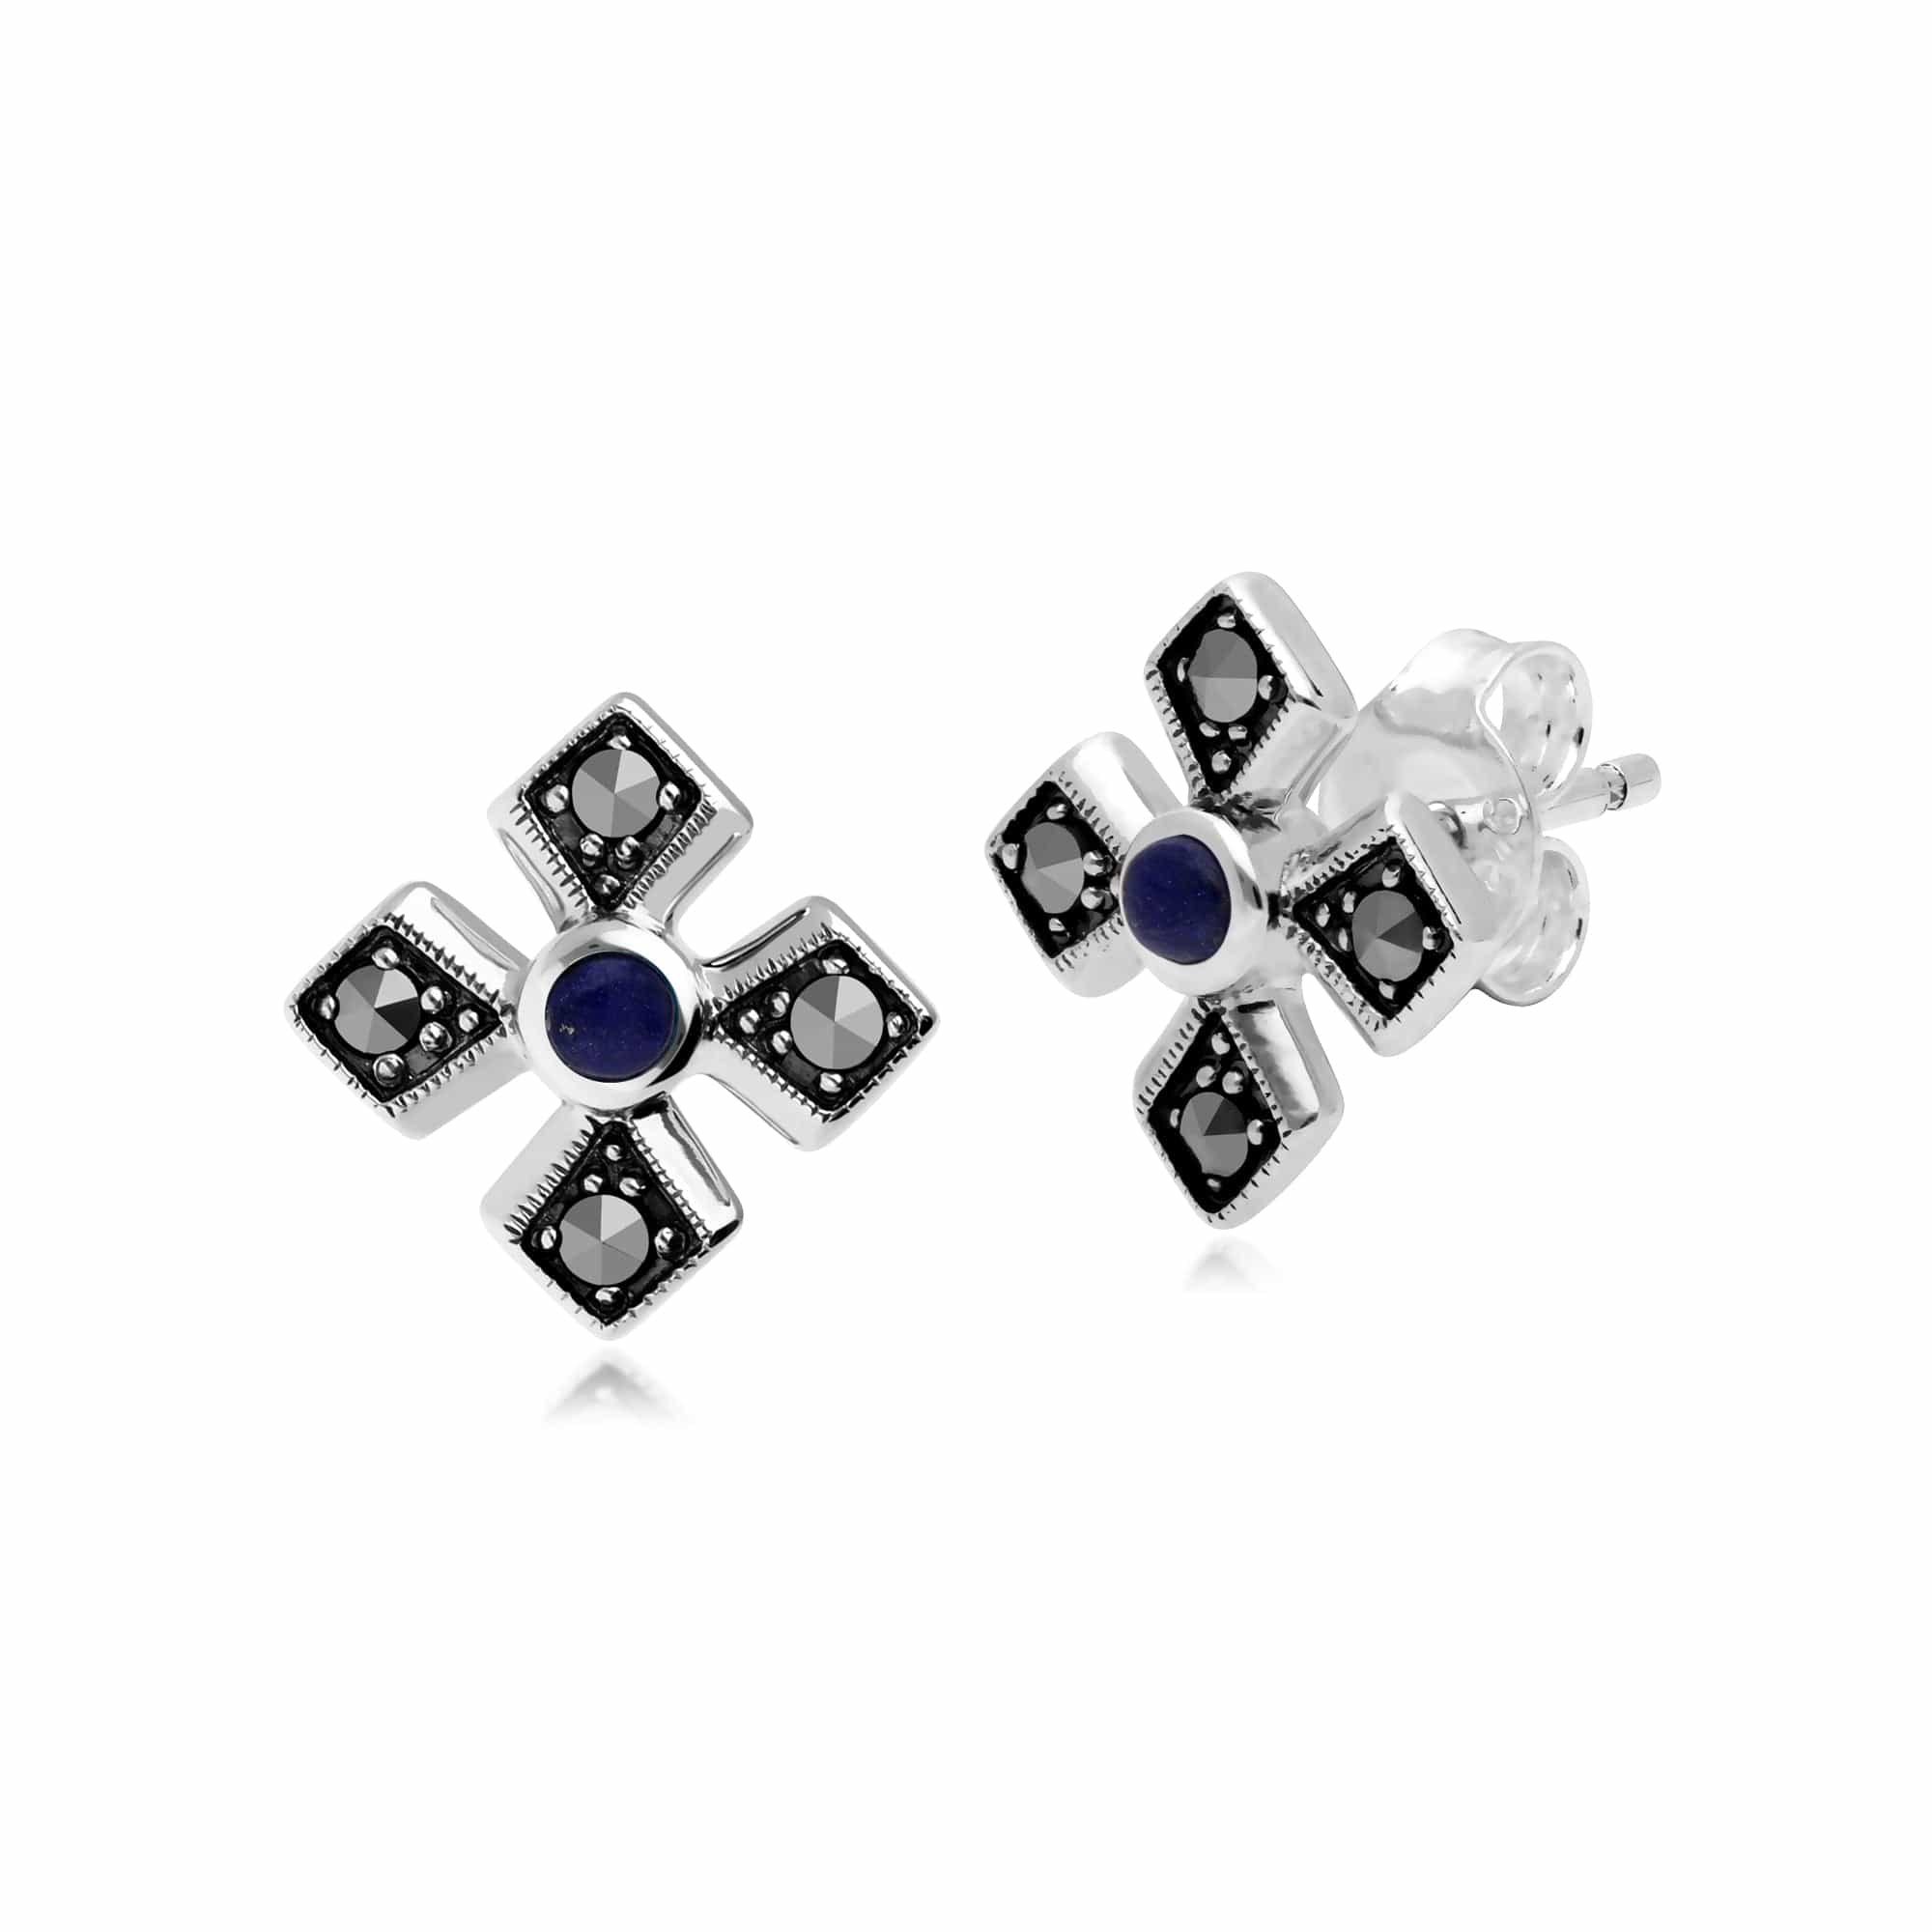 Gemondo Sterling Silver Marcasite & Lapis Lazuli Earring - Gemondo